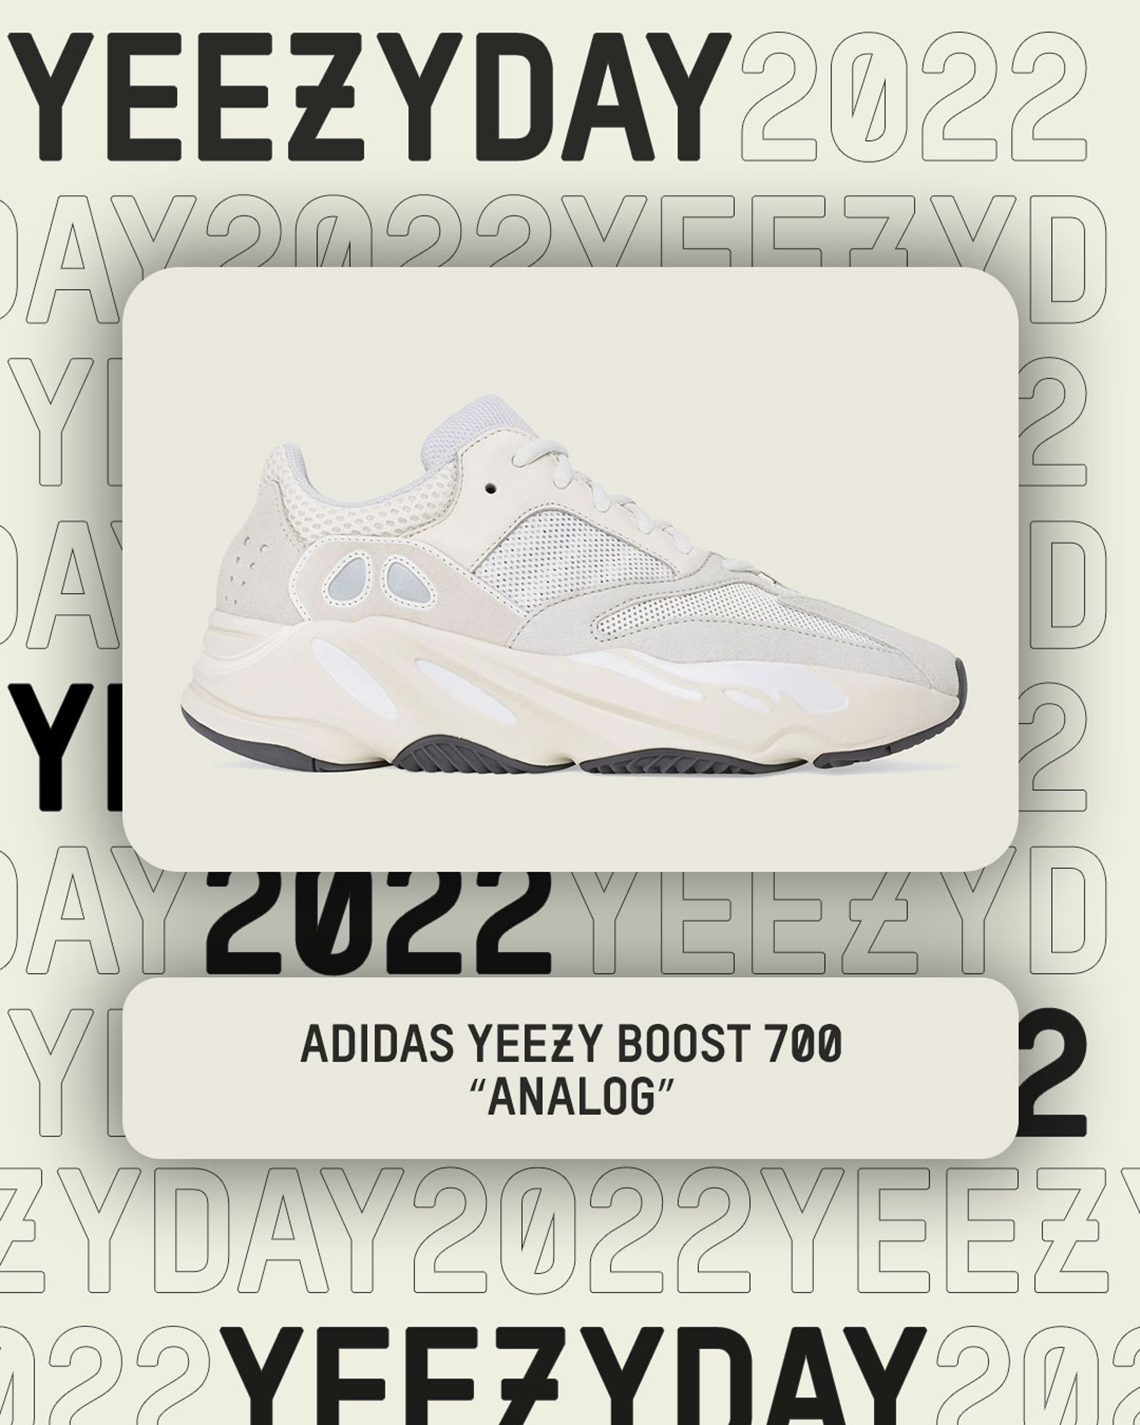 Yeezy Day 2022 footwear adidas terrex free hiker primeblu fz3626 blue Analog